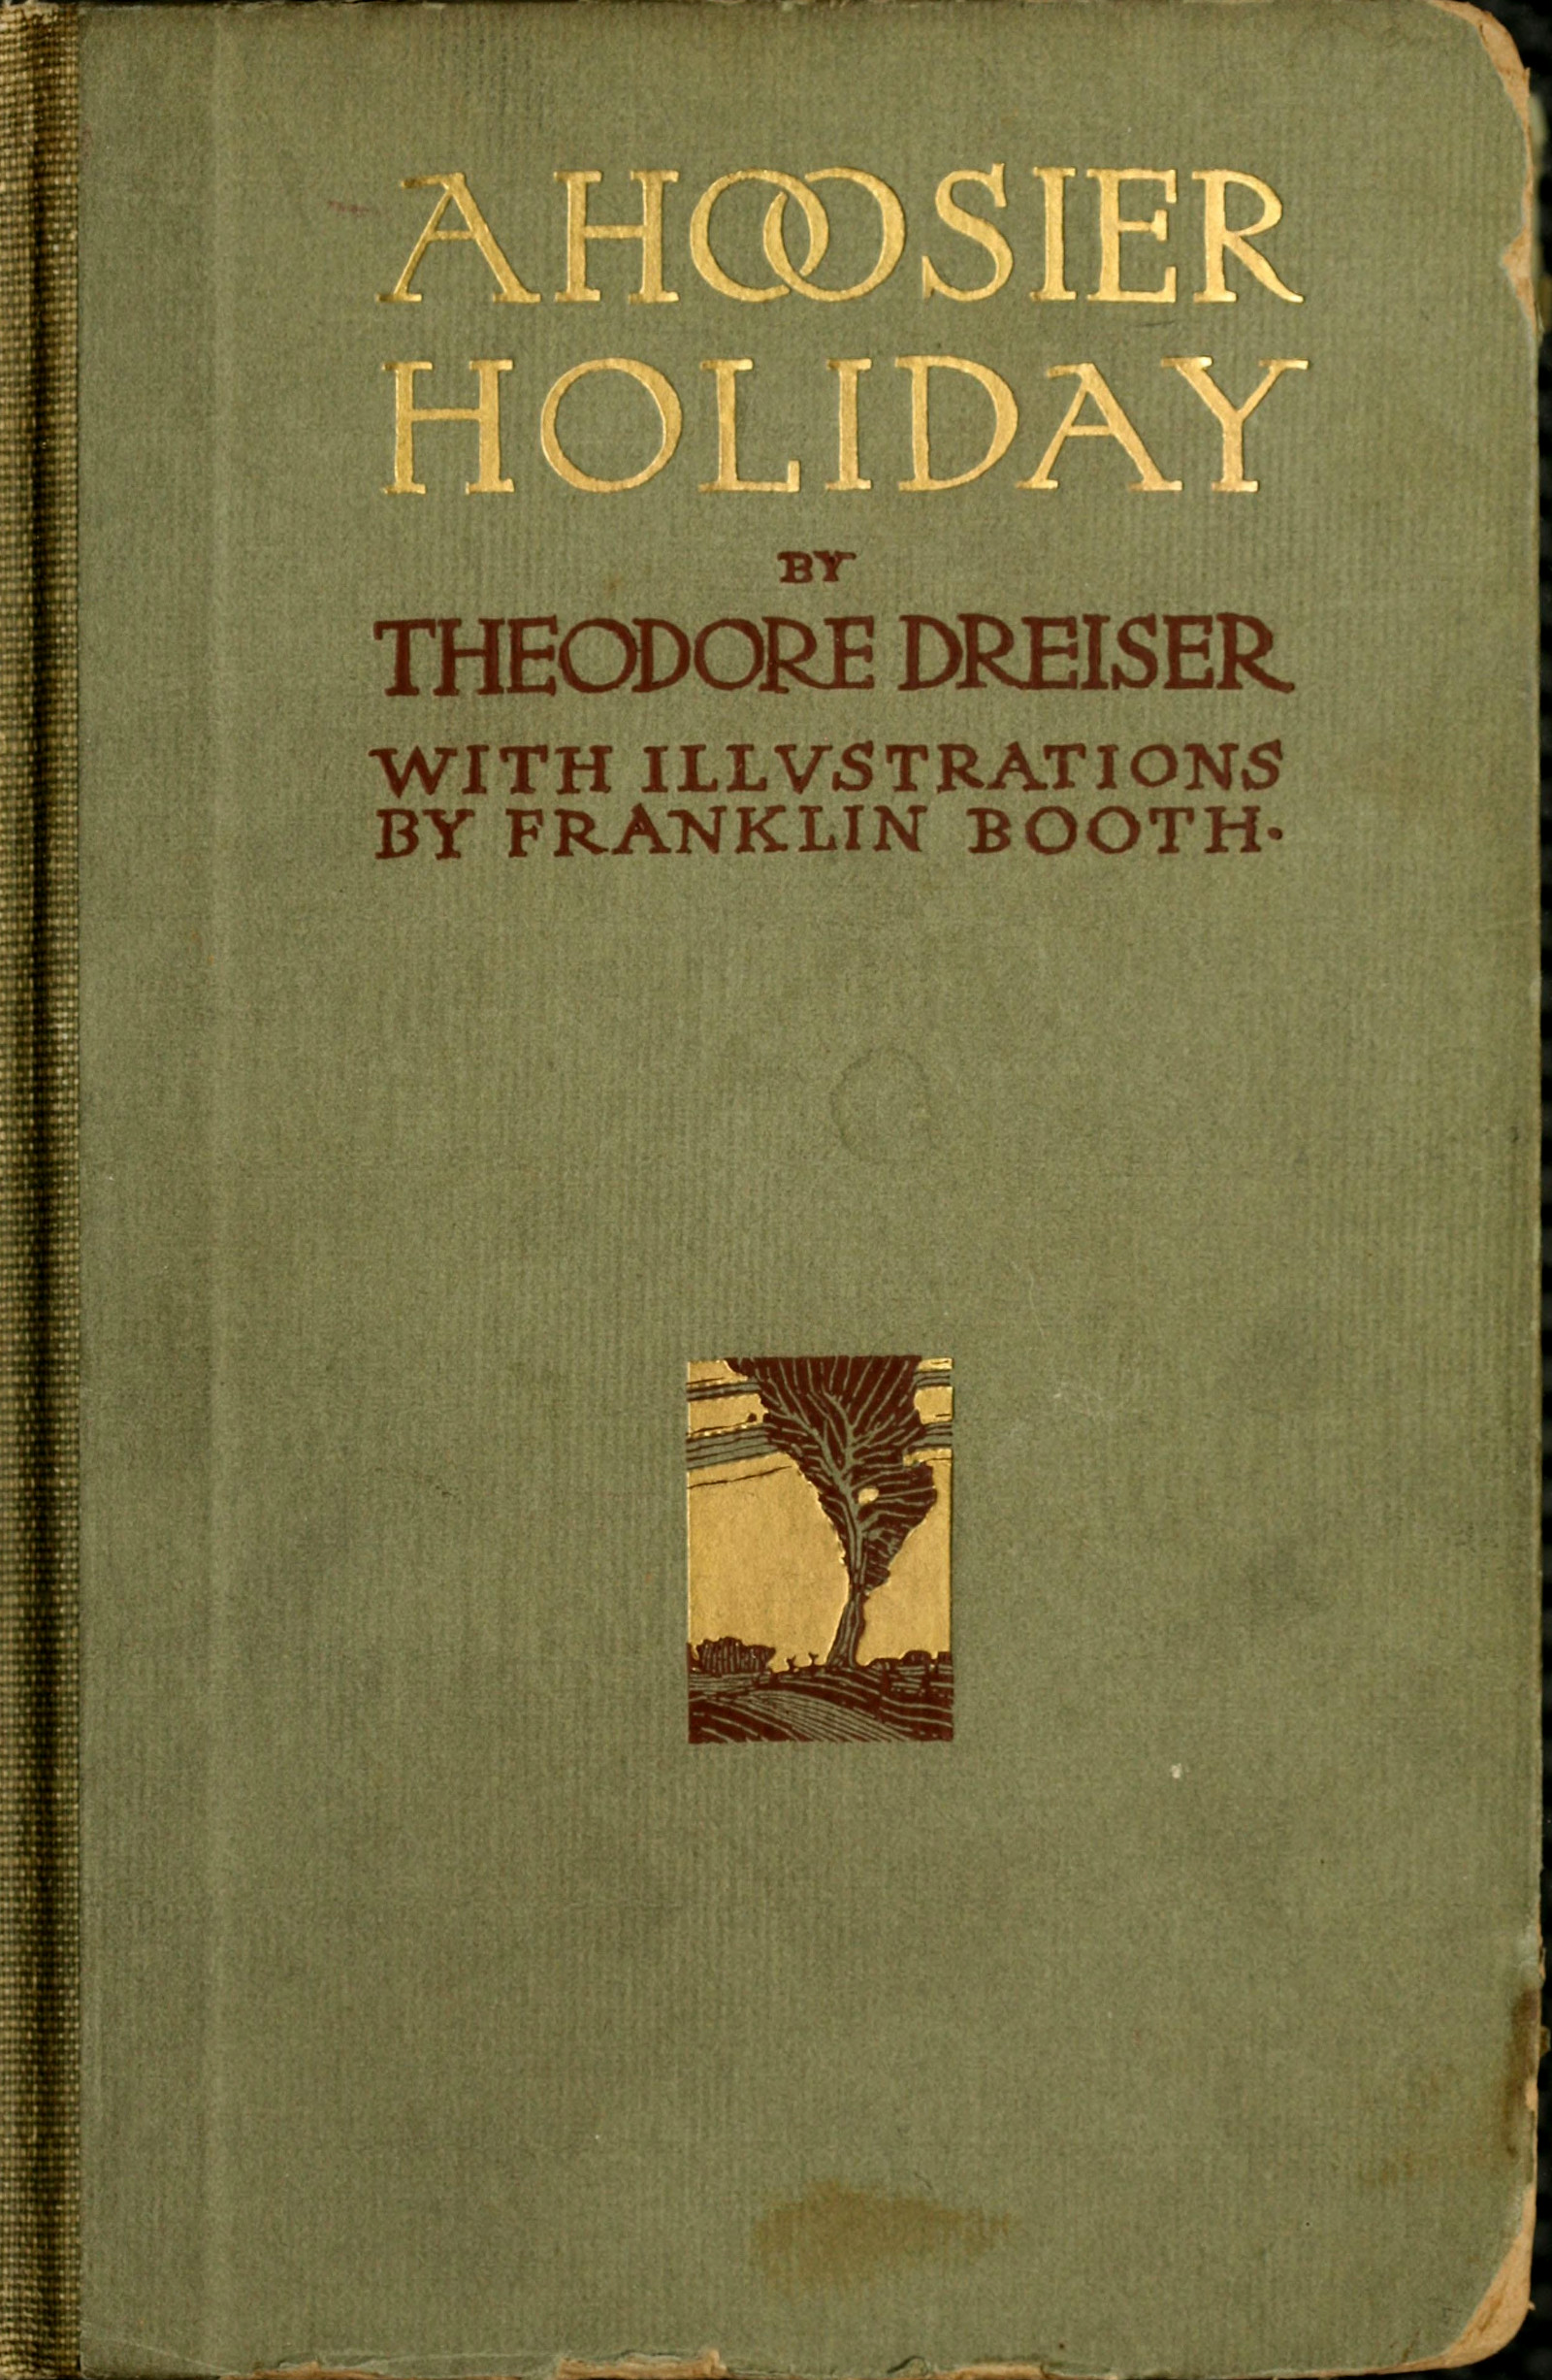 A Hoosier Holiday, by Theodore Dreiser photo